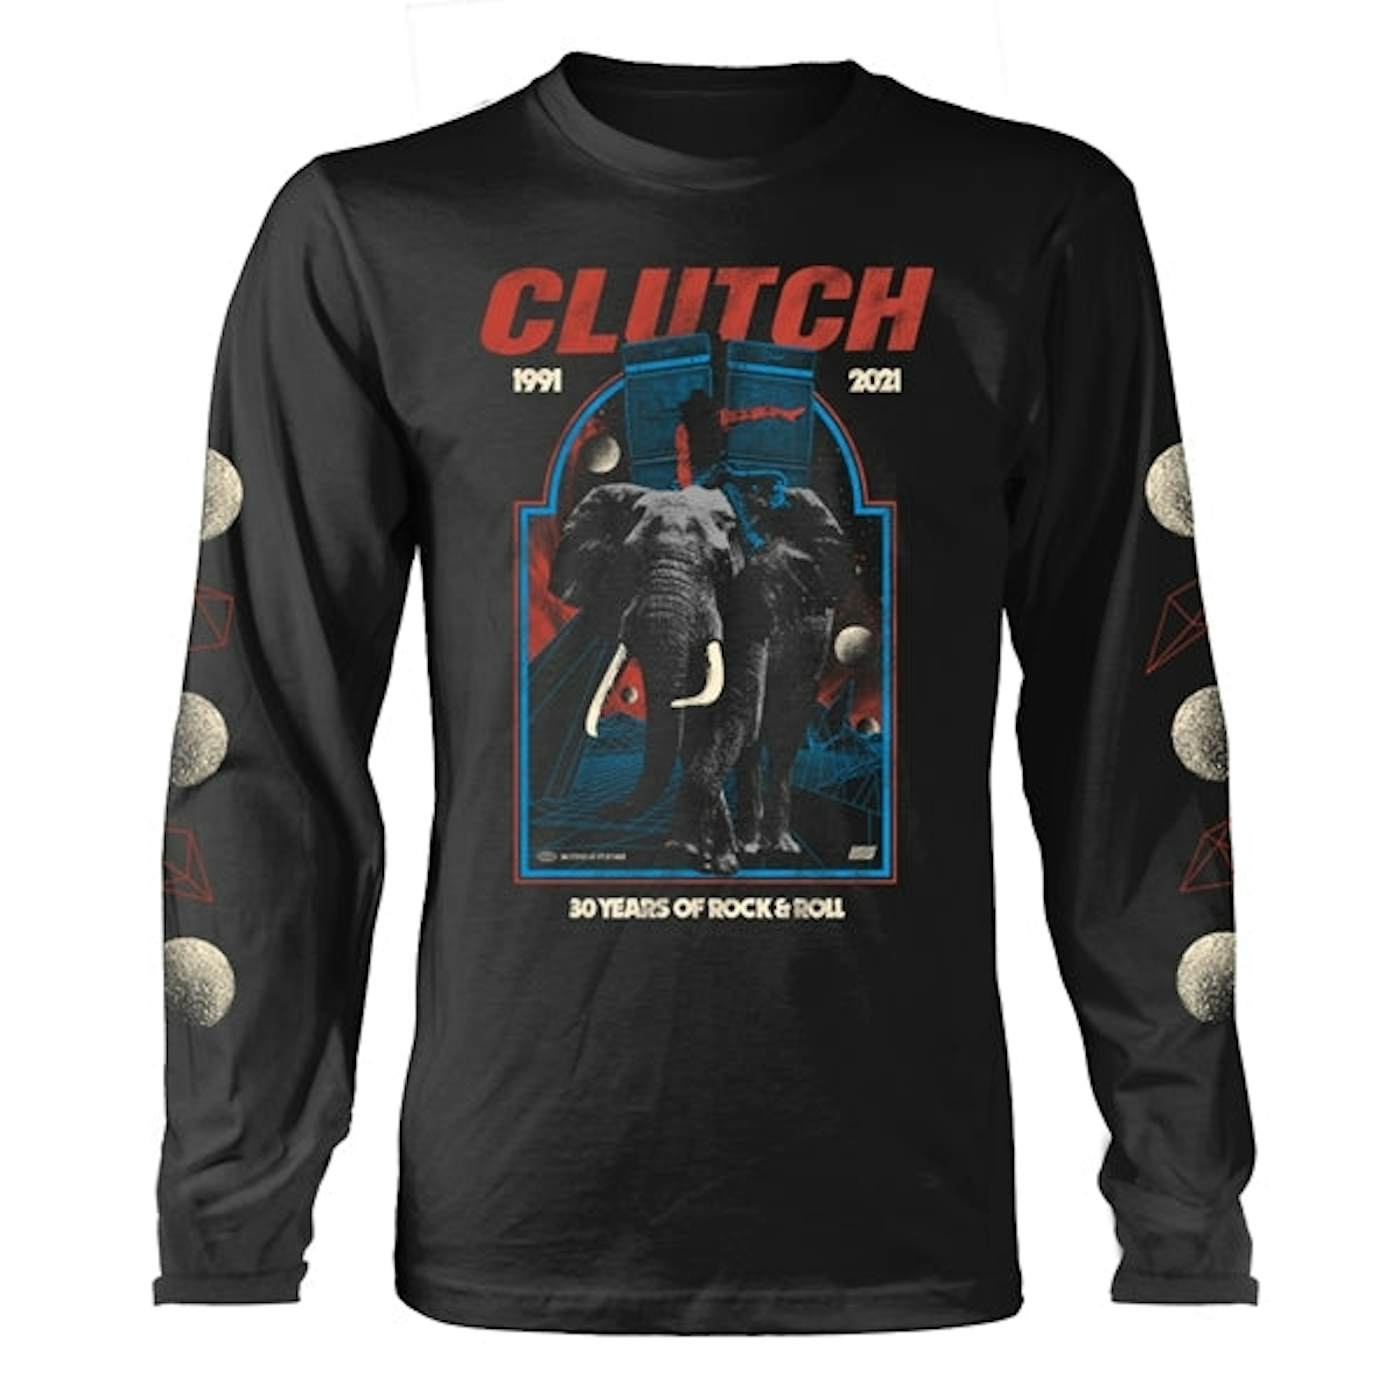 Clutch Long Sleeve T Shirt - Elephant (Black)